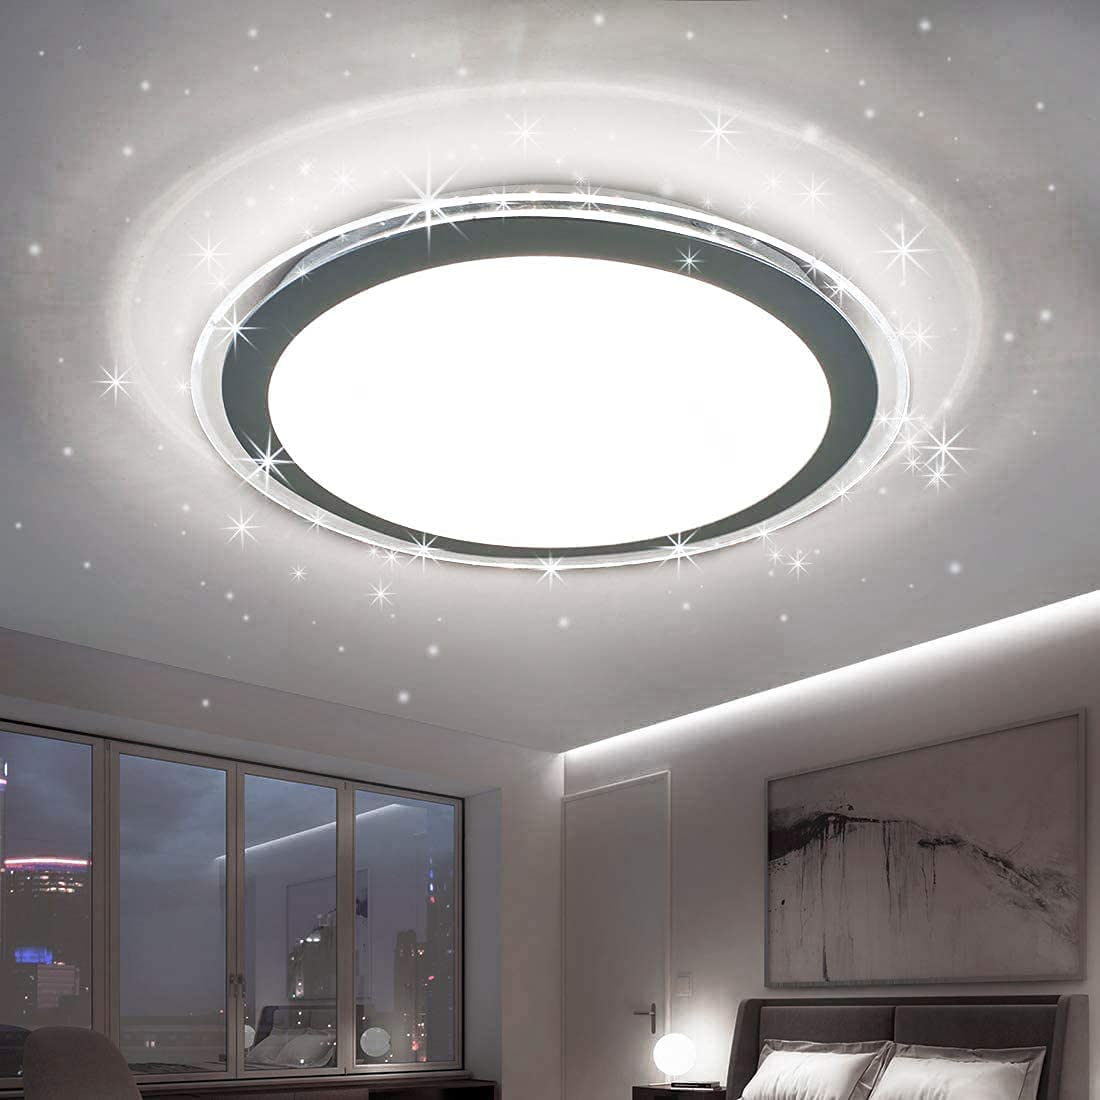 Depuley 13 Inch Flush Mount Ceiling Light Fixture, Round LED Disk Light, 22W (180W Equivalent), Cool White, 6000K Modren Surface Mount Light - WSCL06-22A 1 | Depuley